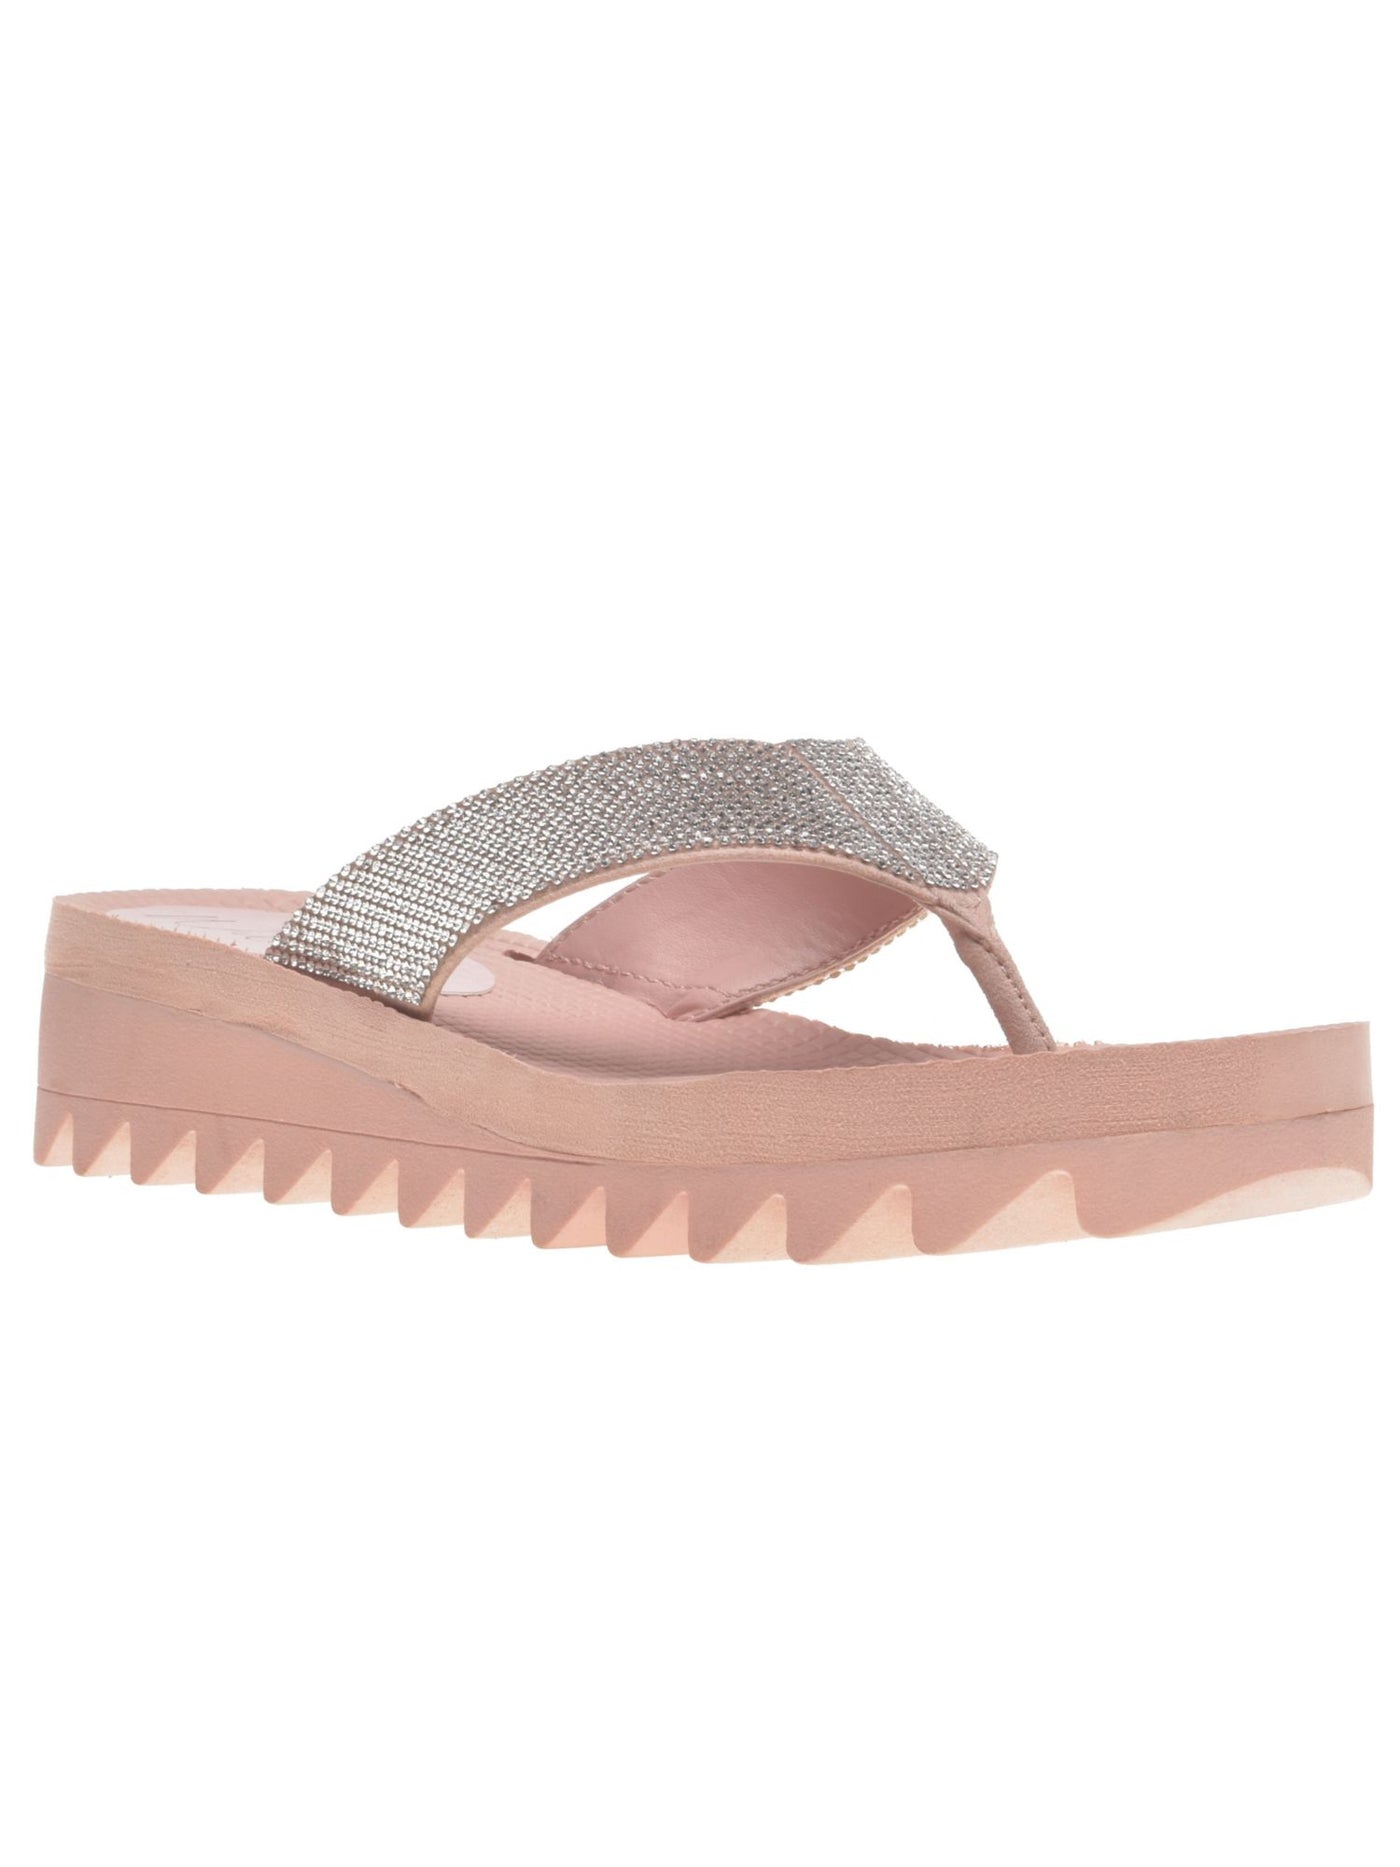 WILD PAIR Womens Pink Saw Tooth Sole Rhinestone Kalabasas Round Toe Wedge Slip On Thong Sandals Shoes 9.5 M